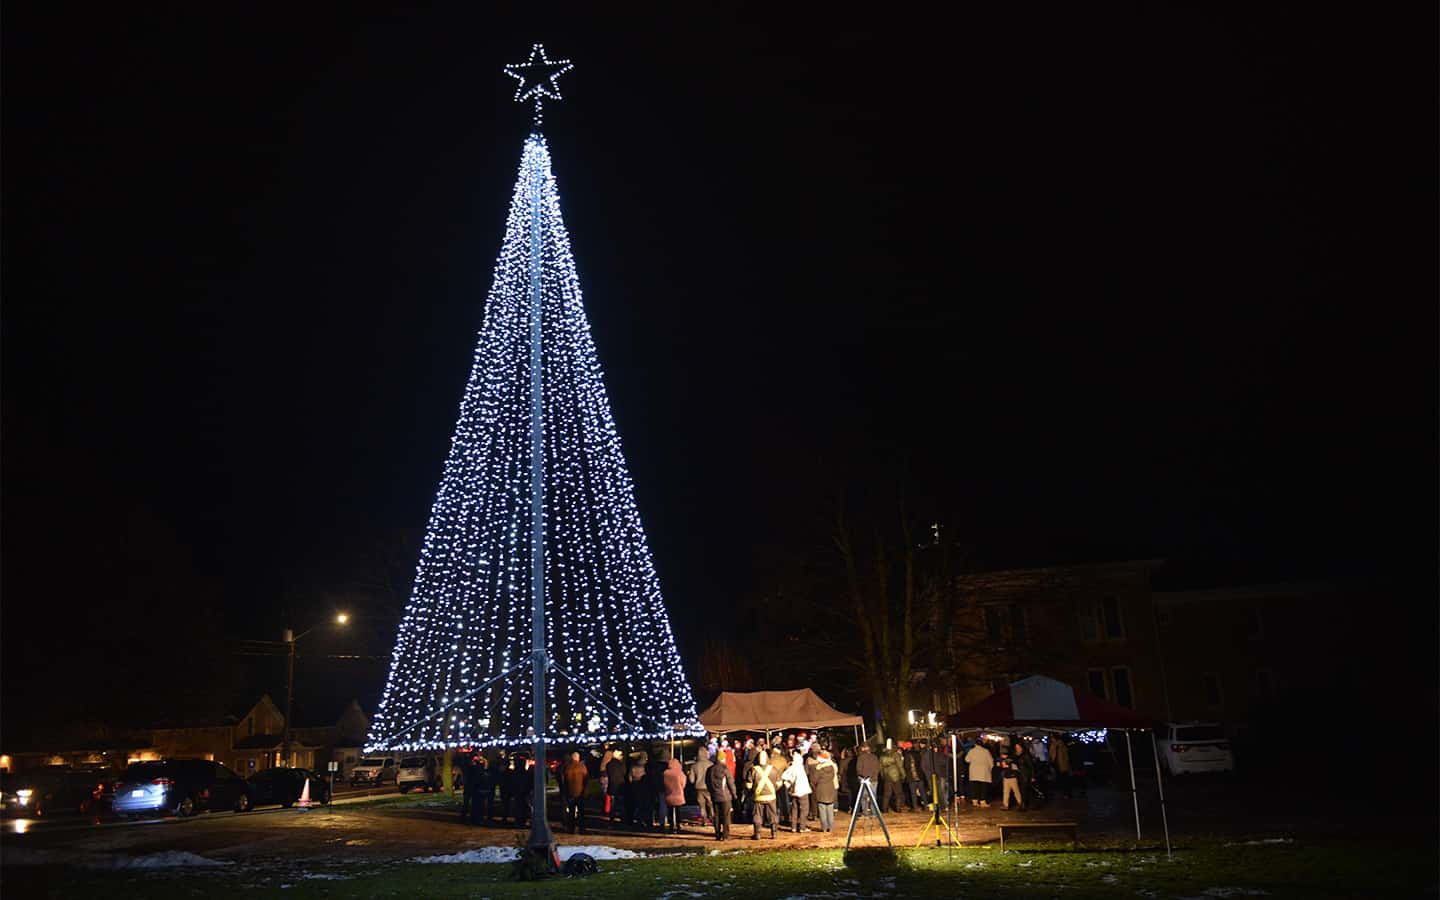 Wellesley Lions Tree of Light campaign kicks off the season